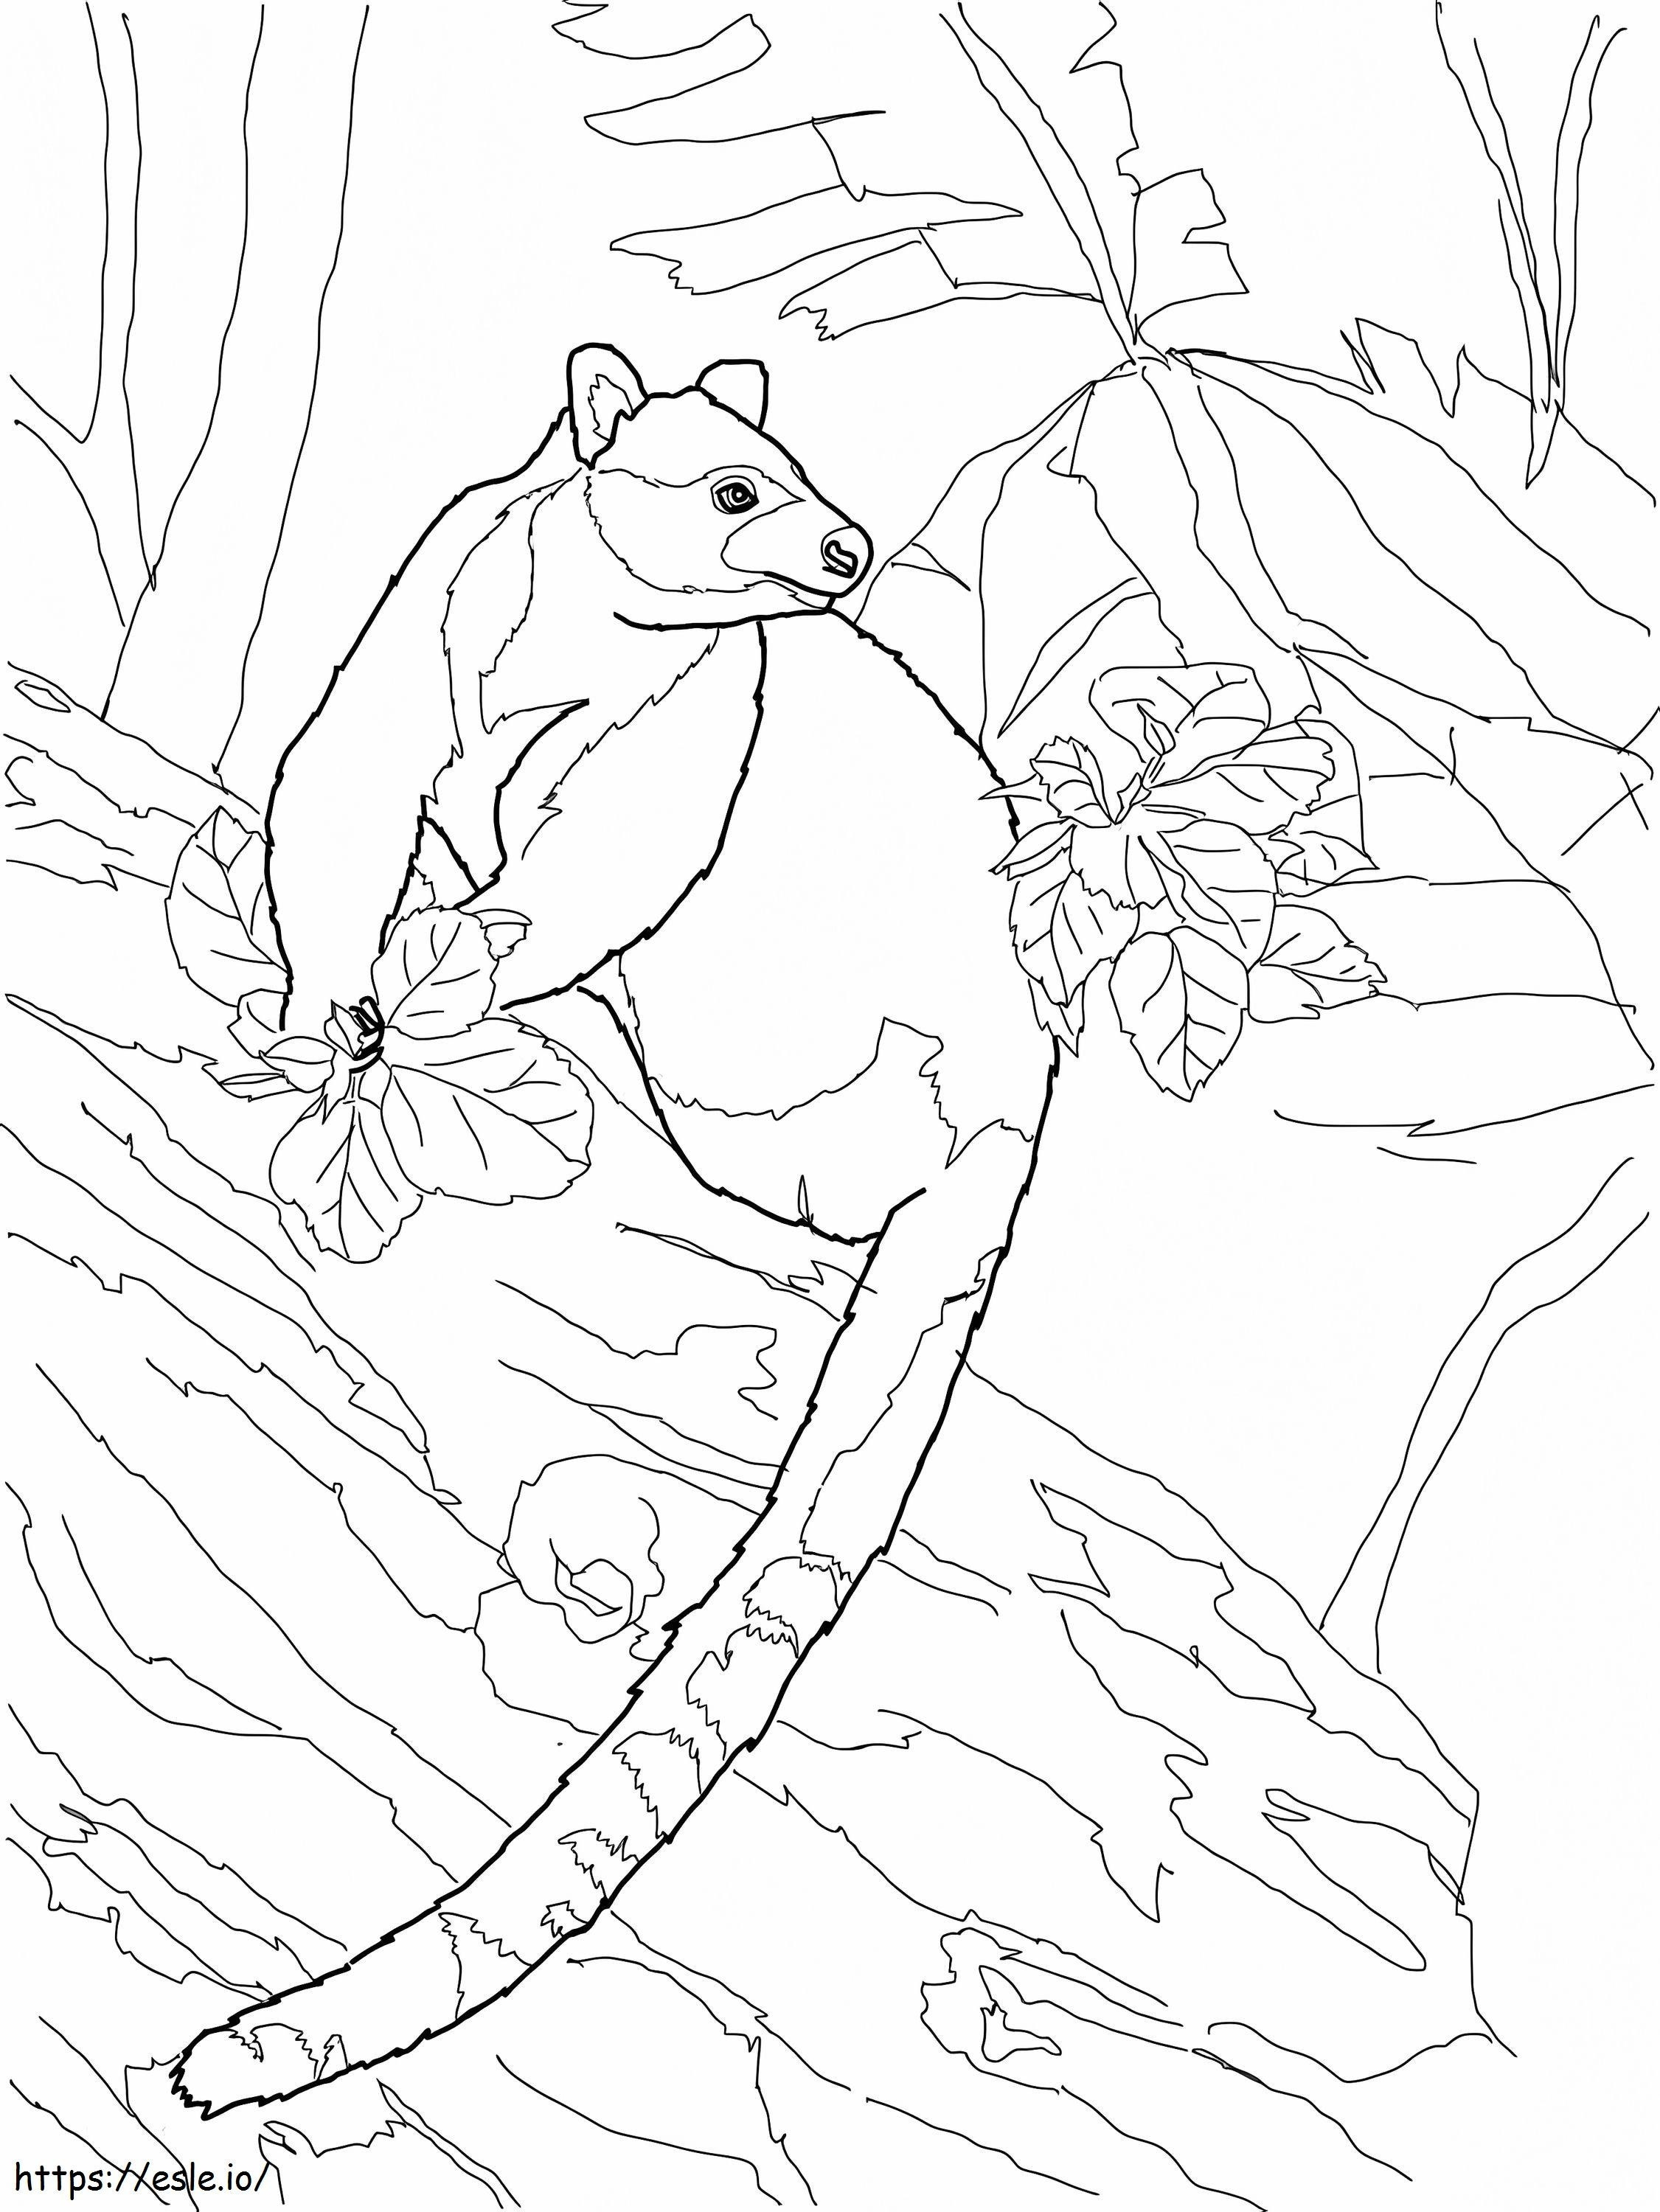 Goodfellows Tree Kangaroo coloring page